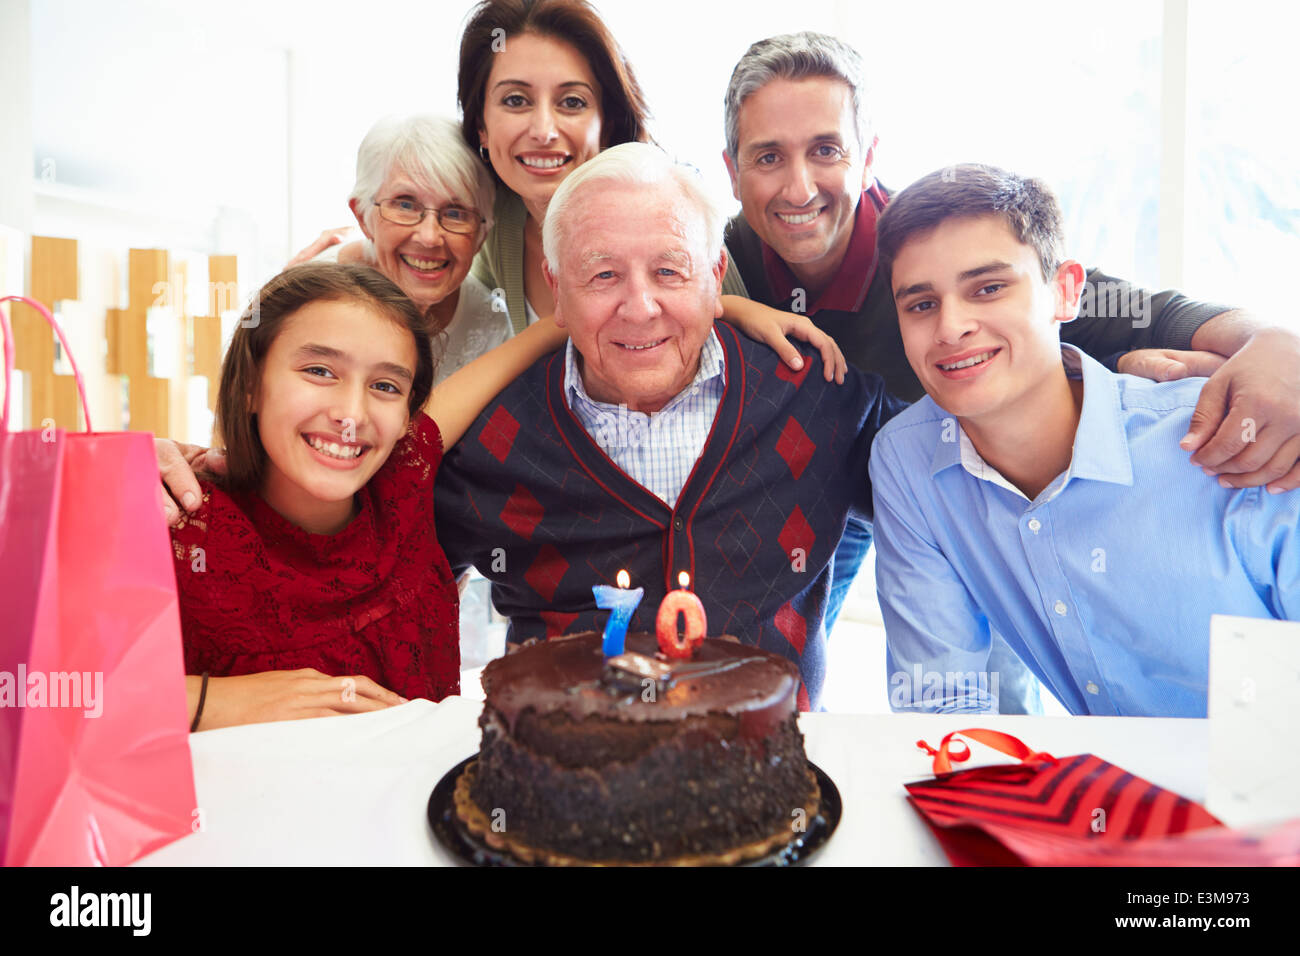 Family Celebrating 70th Birthday Together Stock Photo